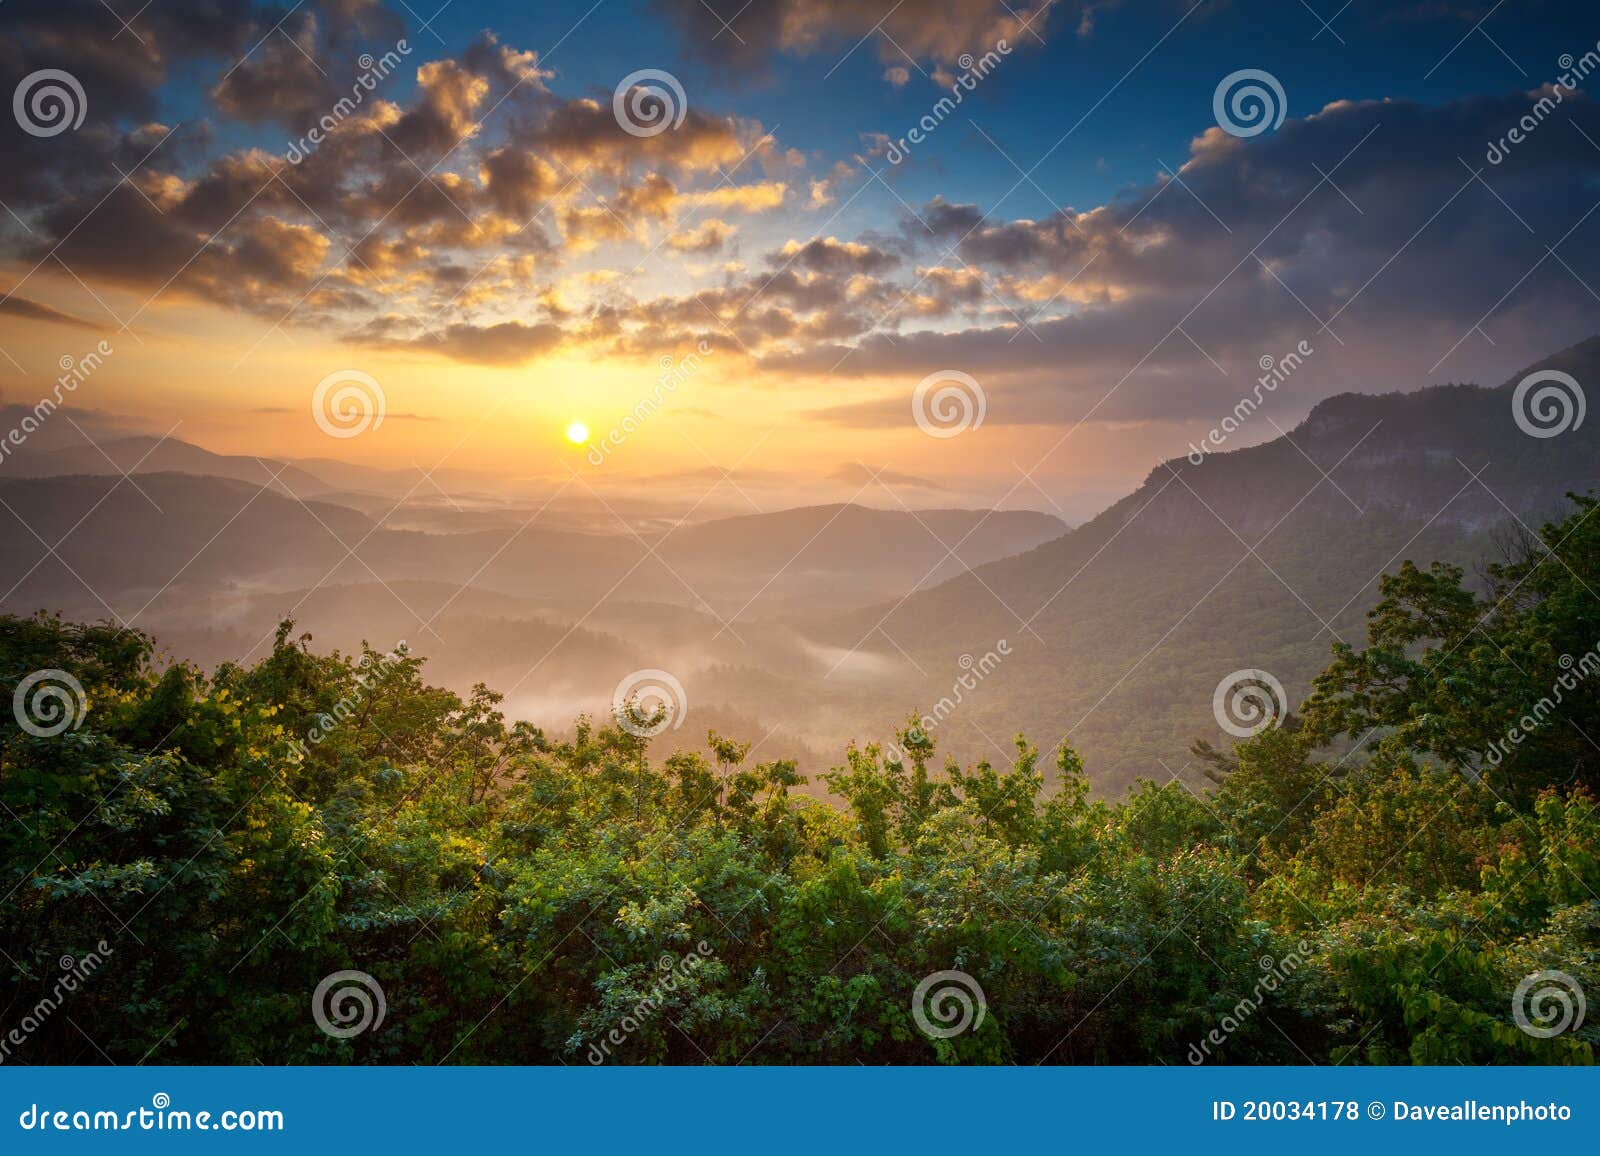 sunrise blue ridge mountains scenic appalachians